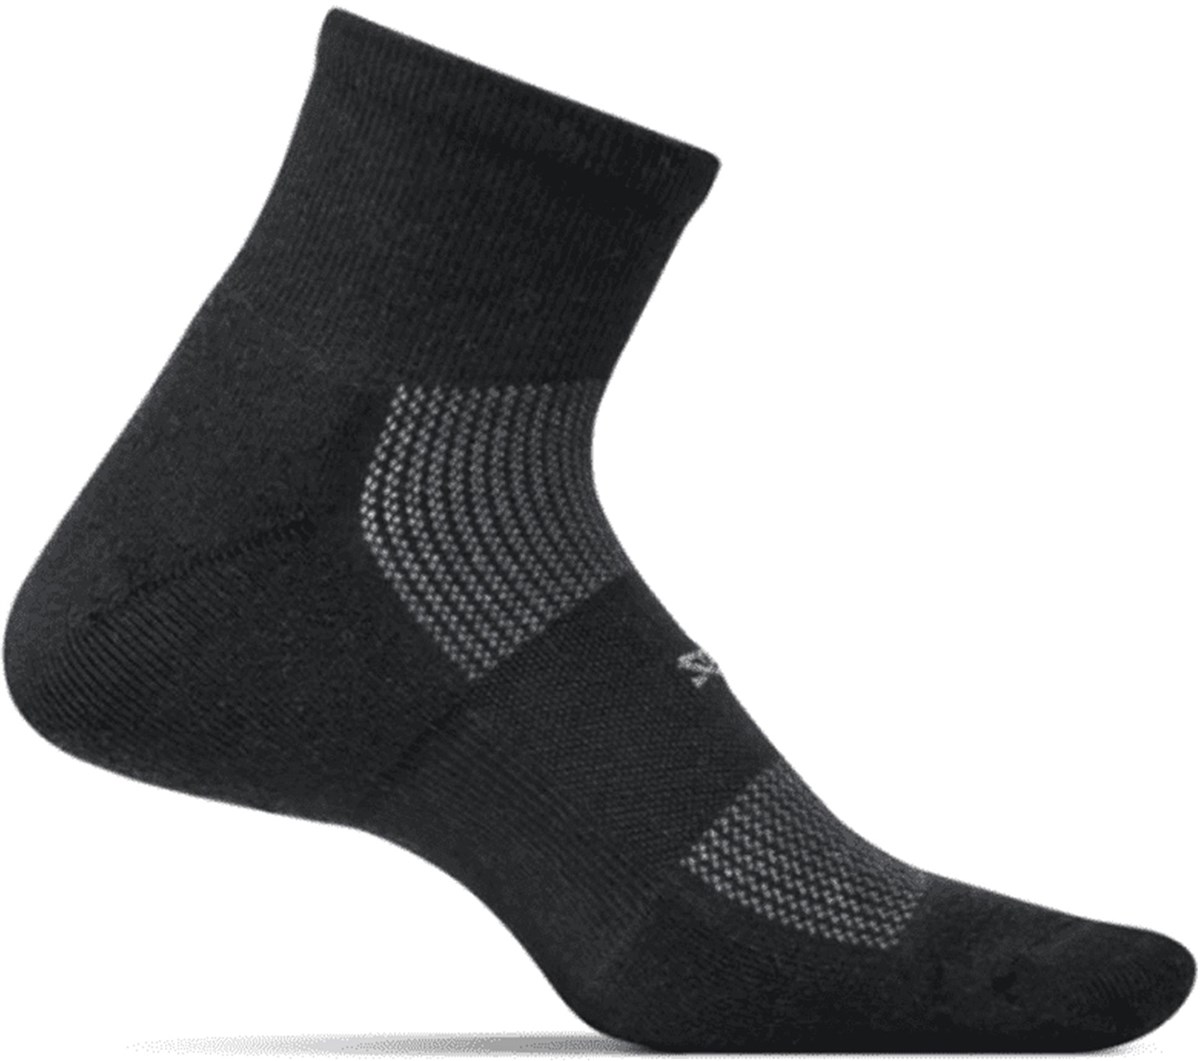 Feetures High Performance Cushion Quarter Socks (1 Pair) product image